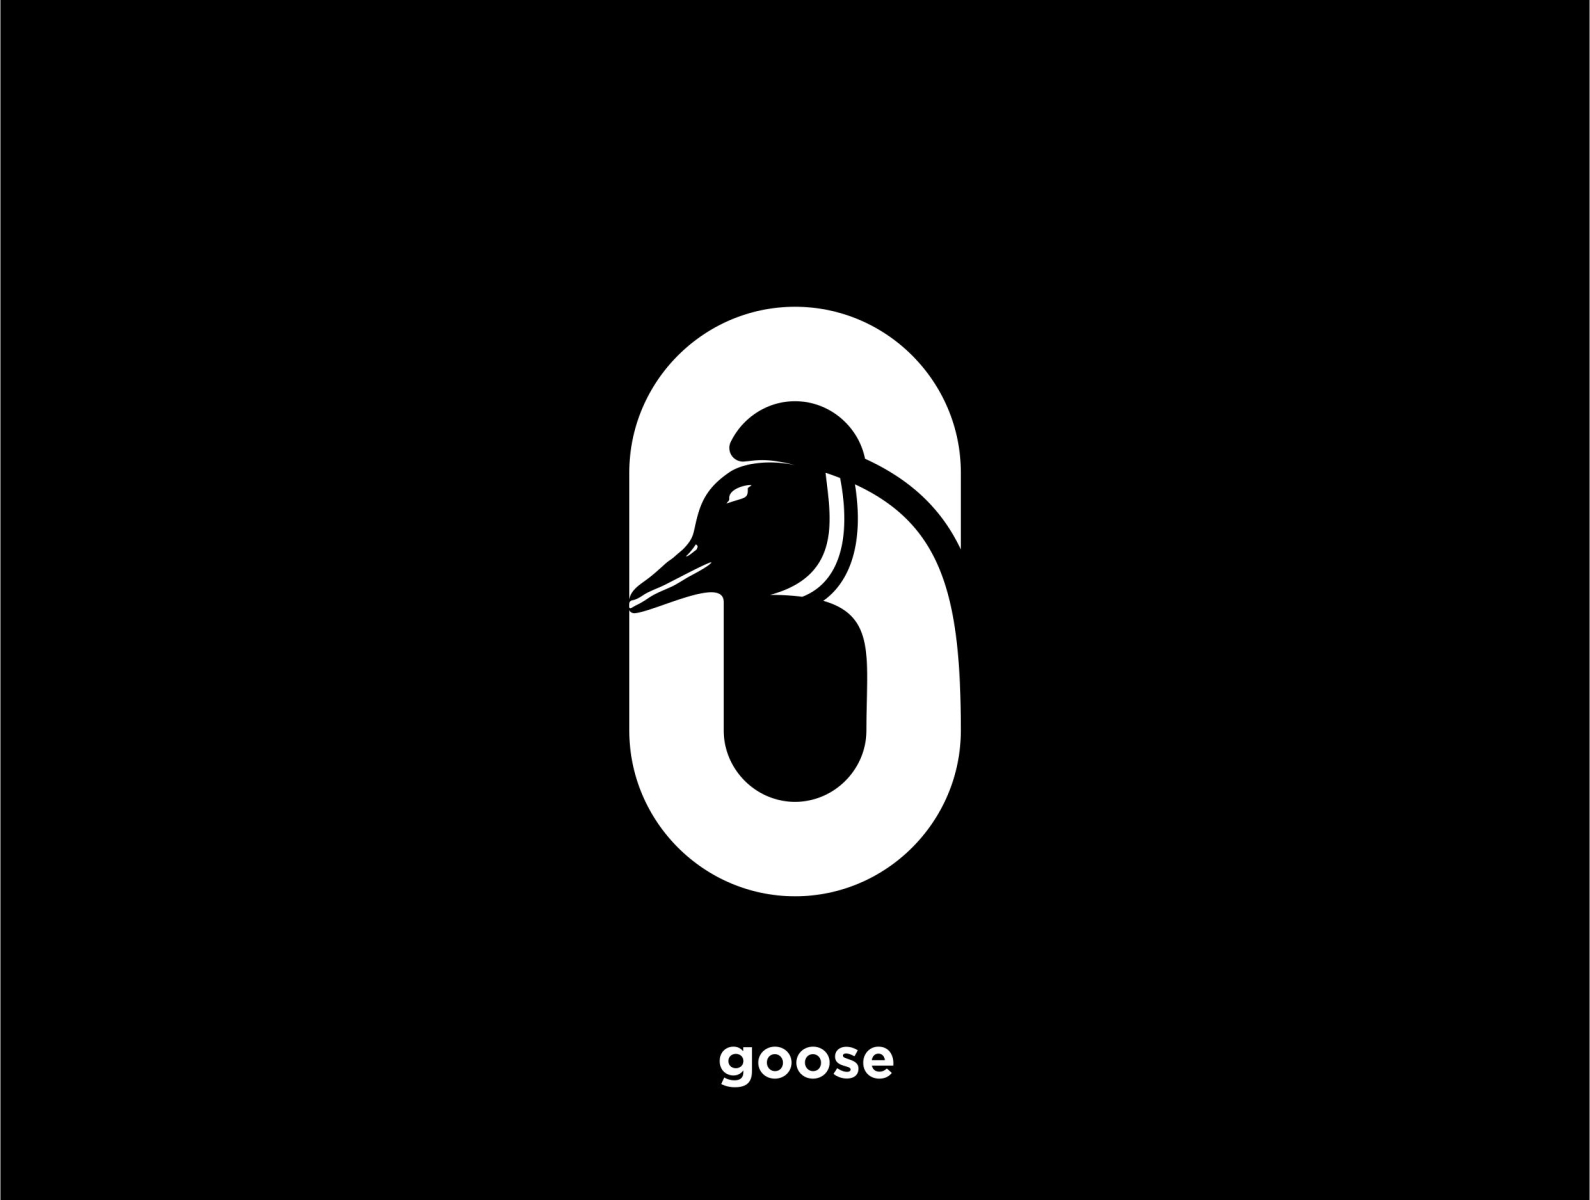 goose logo by AHMAD on Dribbble